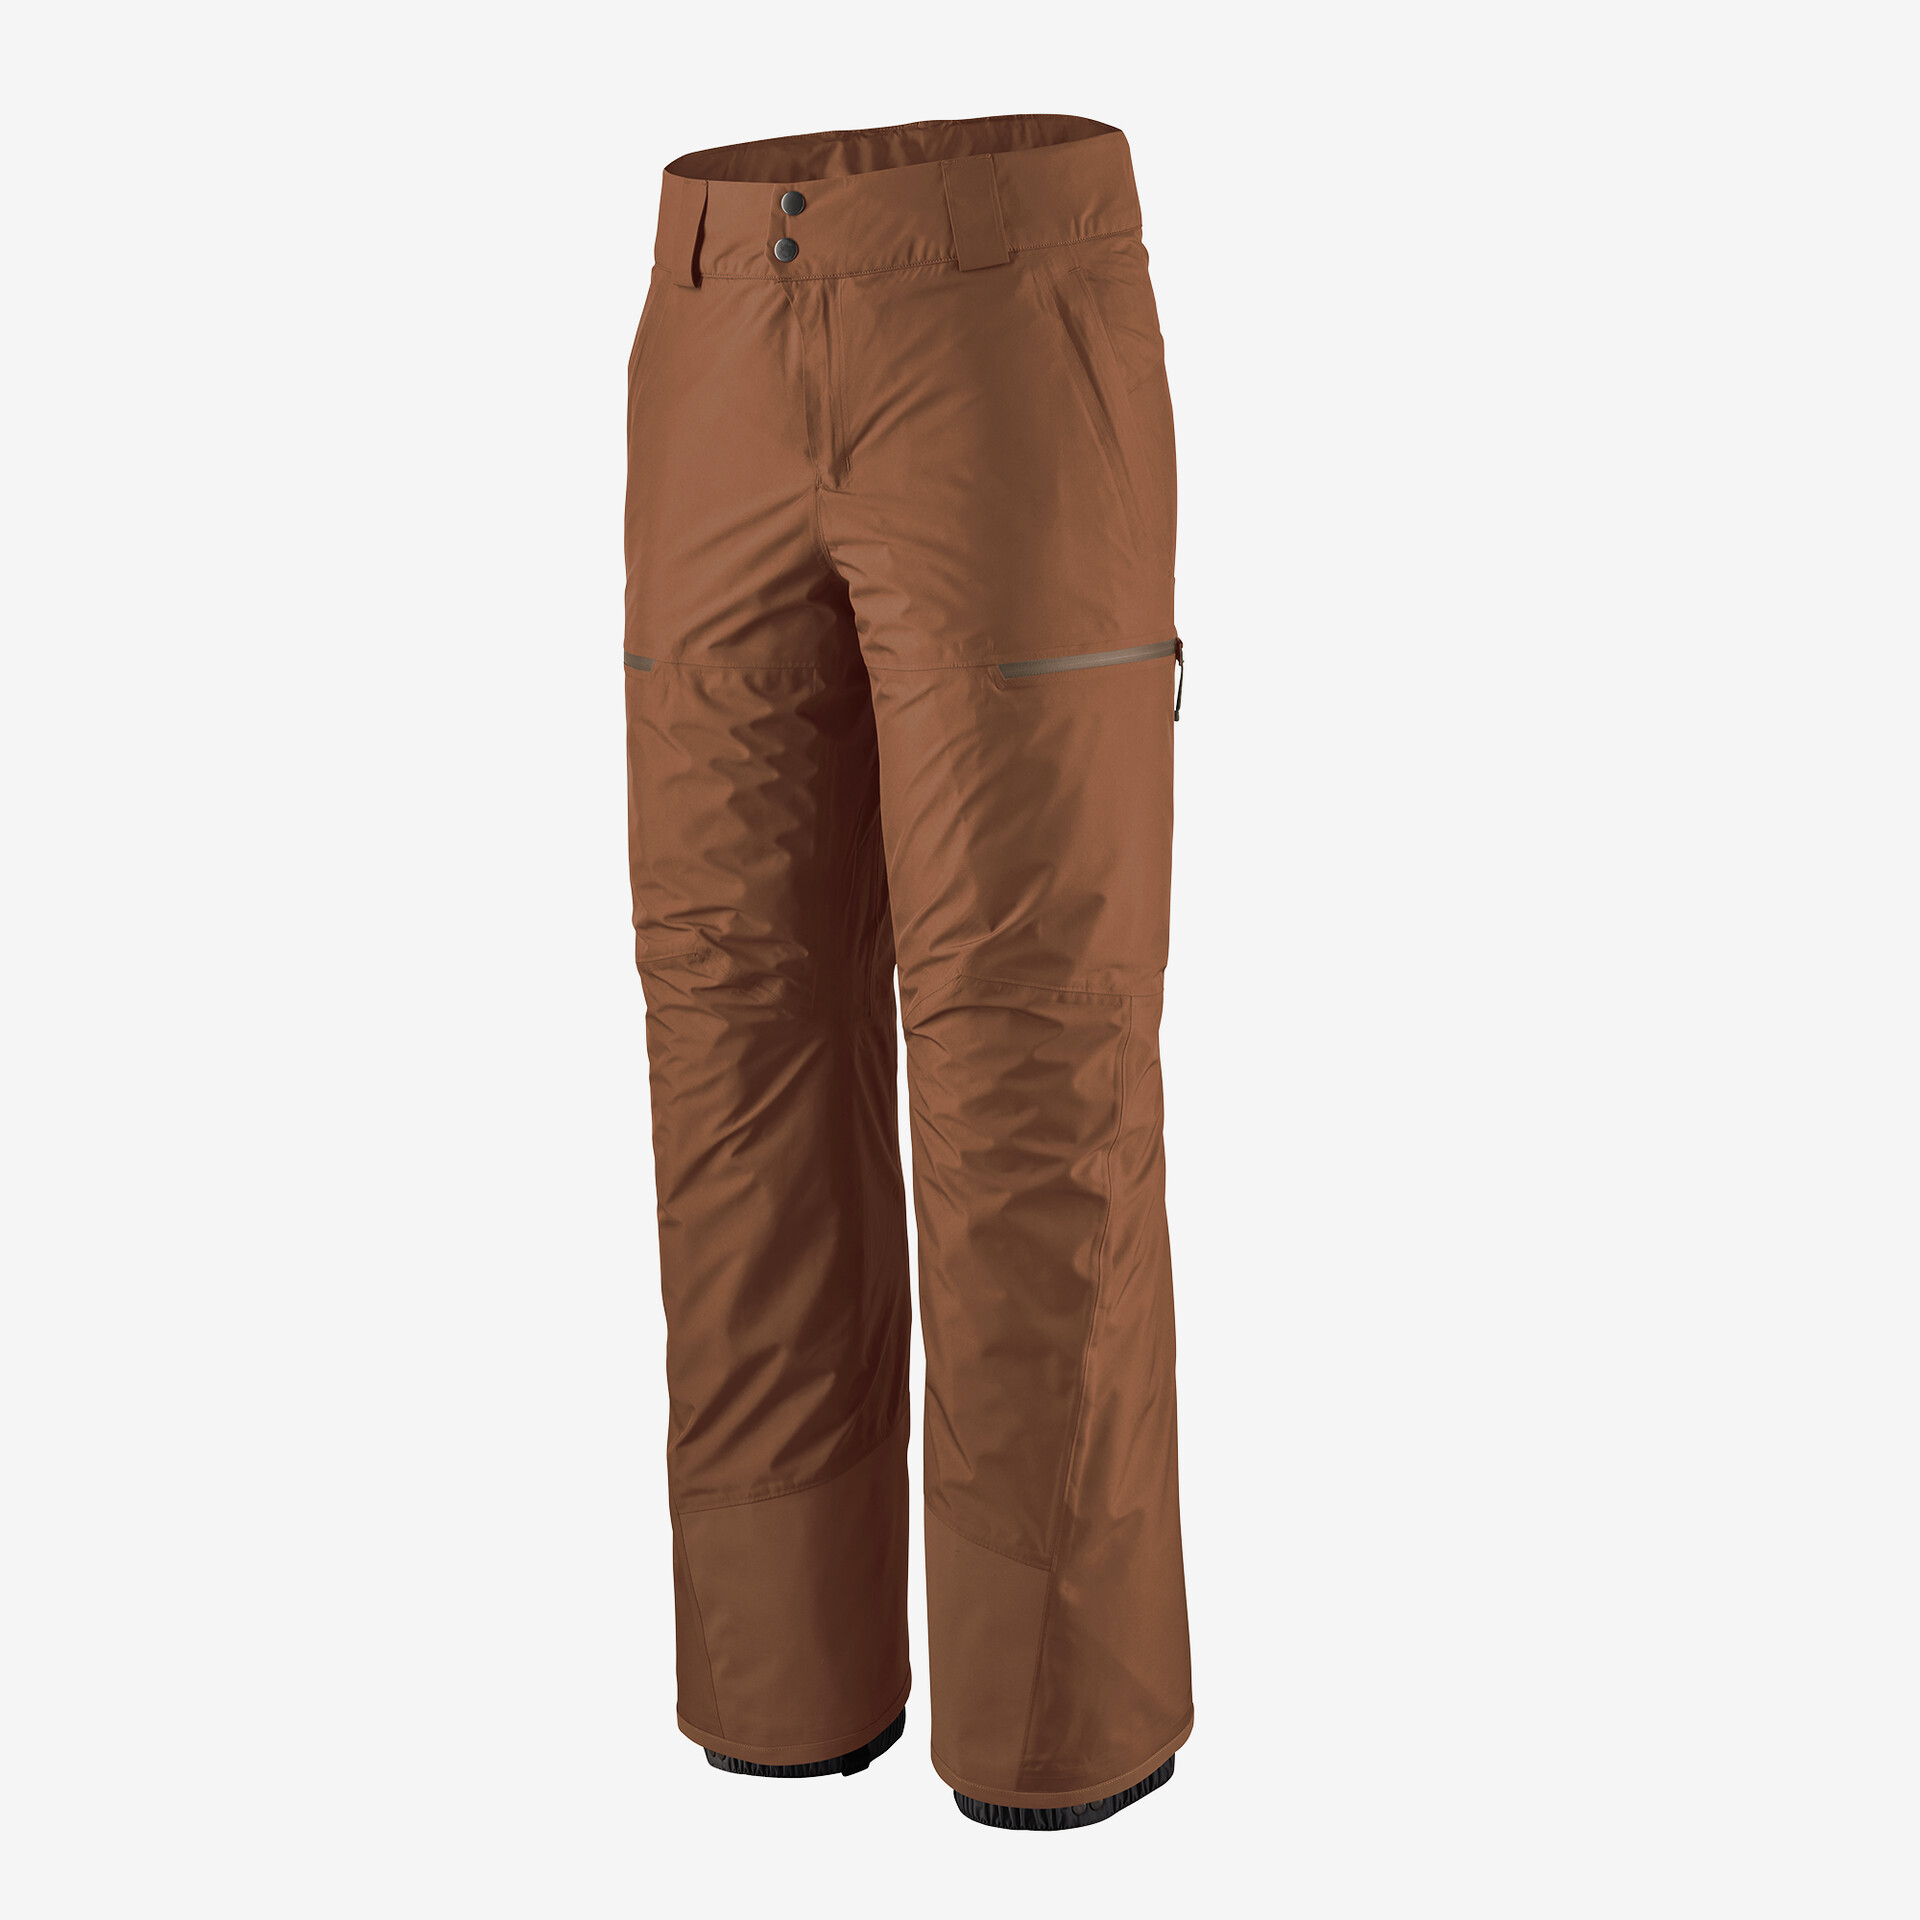 Мужские брюки Powder Town - стандартные Patagonia, мус коричневый мужские брюки storm shift patagonia мус коричневый